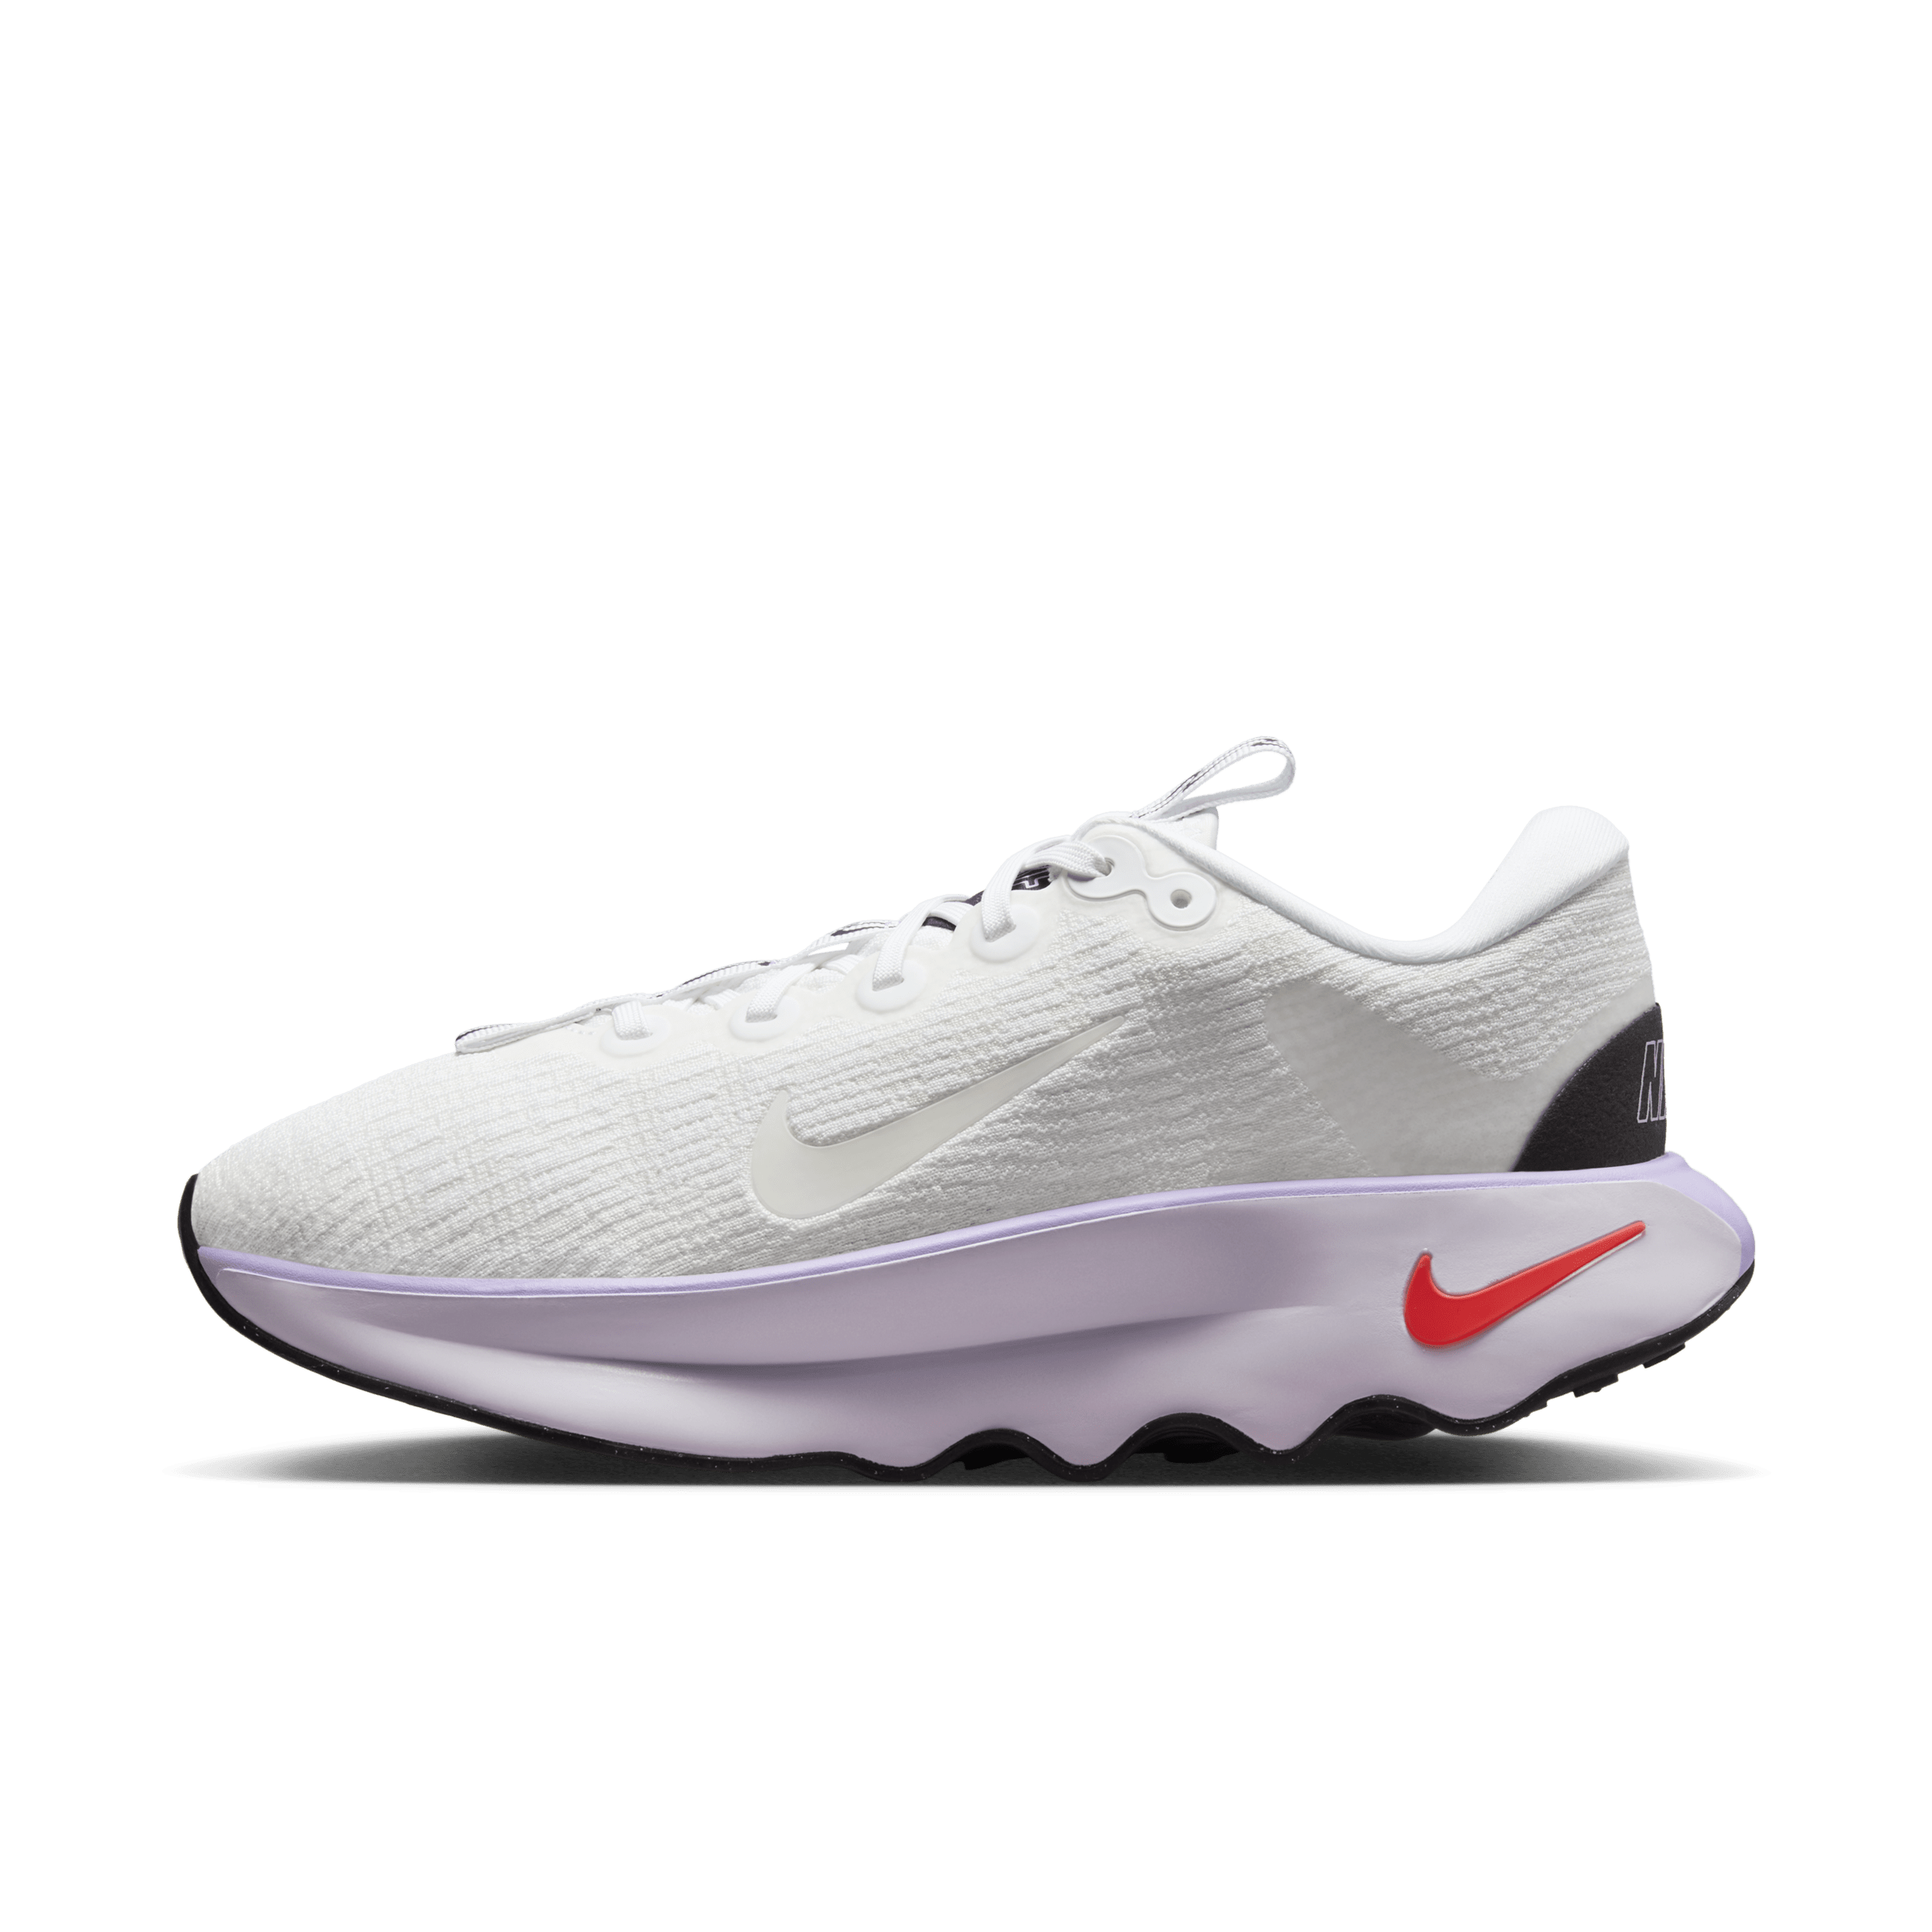 Scarpa da camminata Nike Motiva – Donna - Bianco